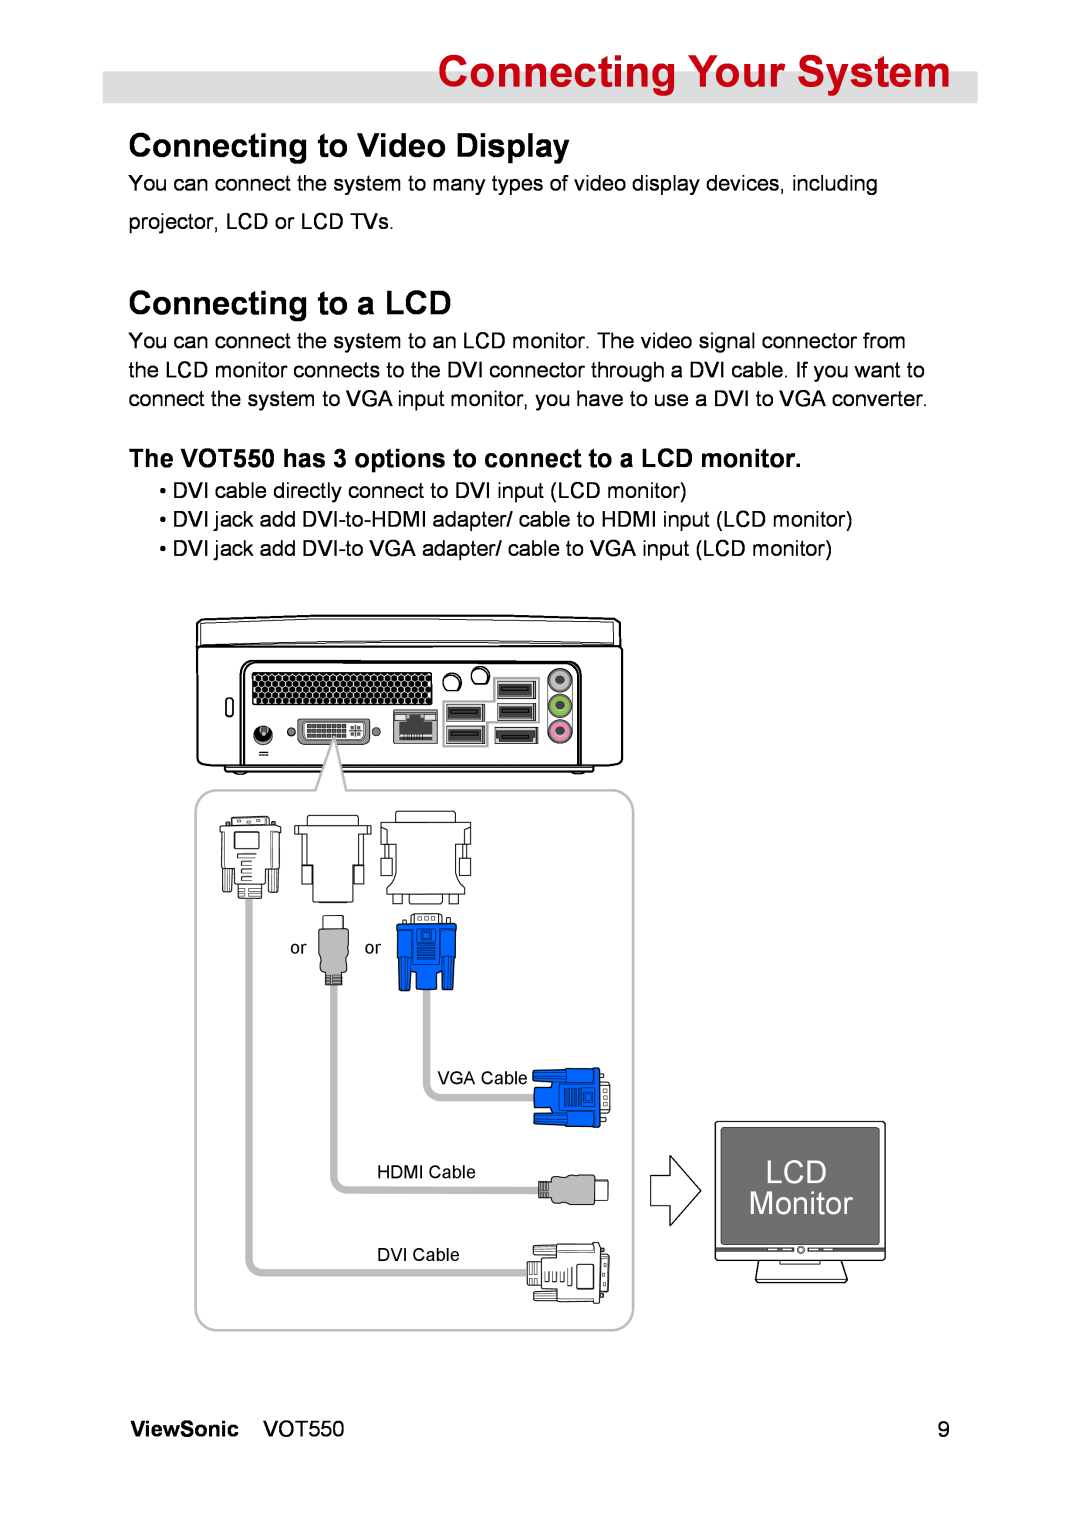 ViewSonic manual Connecting to Video Display, Connecting to a LCD, Connecting Your System, LCD Montor, ViewSonic VOT550 